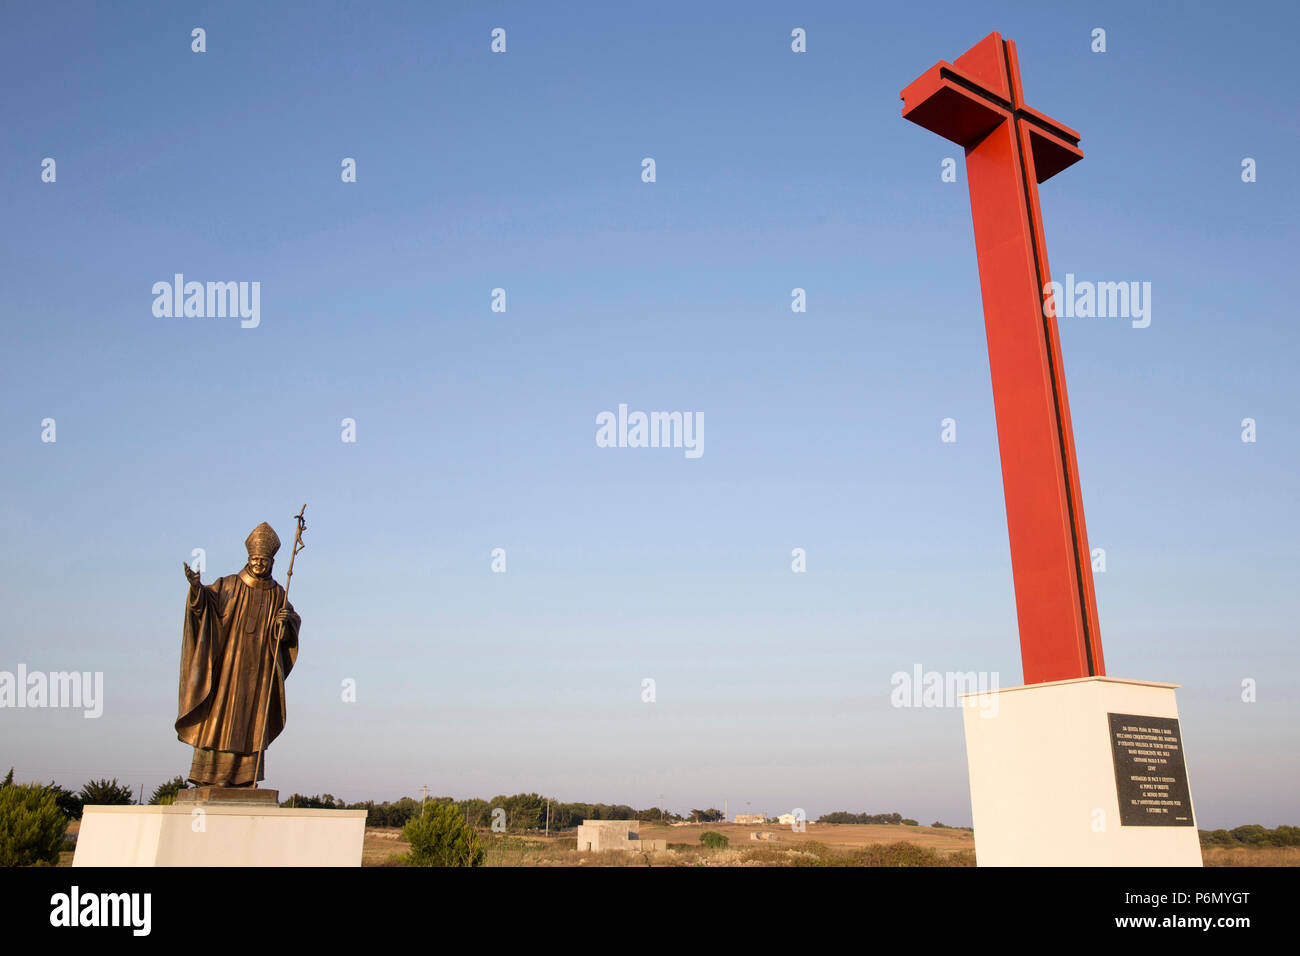 Memorial commemorating Pope John Paul II's visit to Otranto and the 500th anniversary of the Otranto martyrs, Italy. Stock Photo